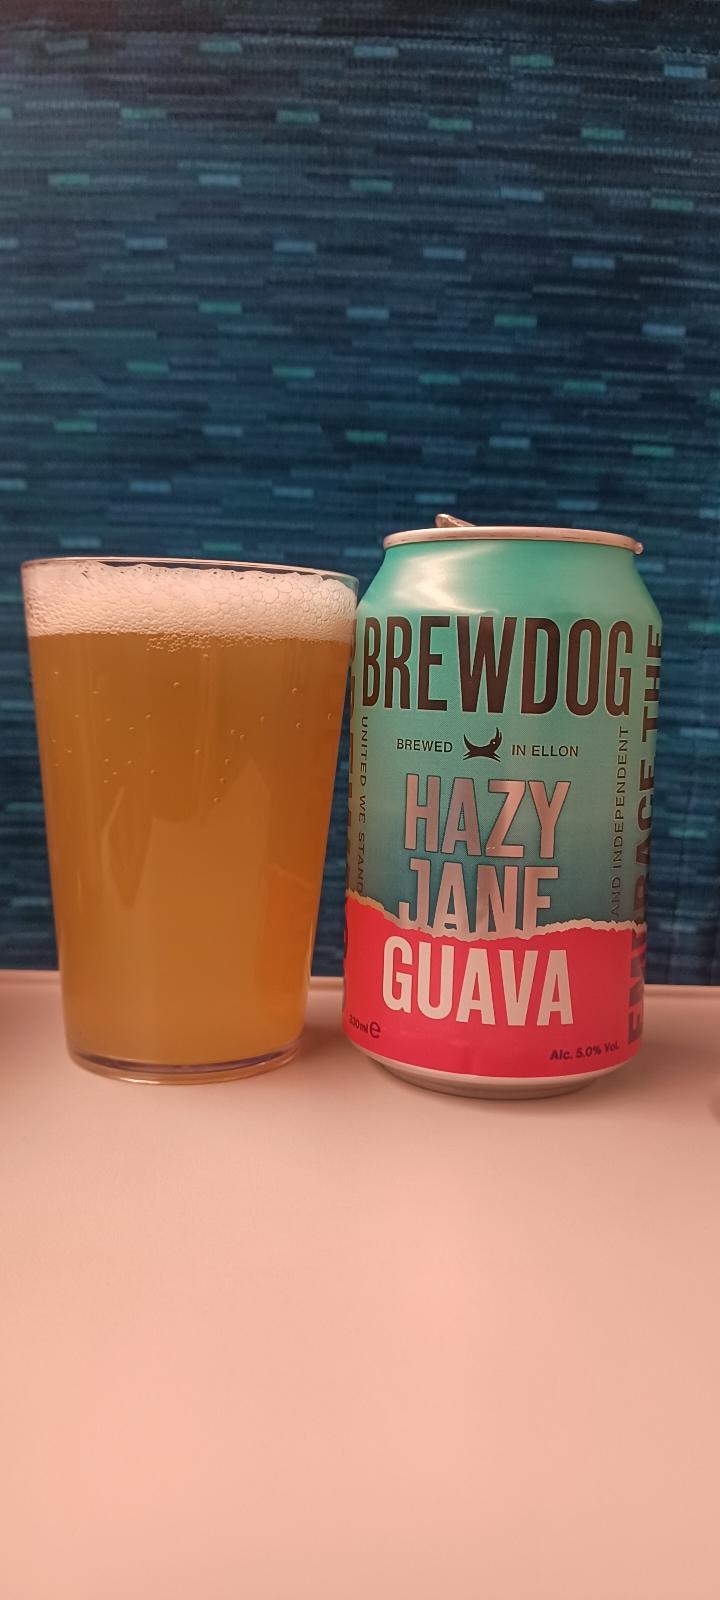 Hazy Jane Guava